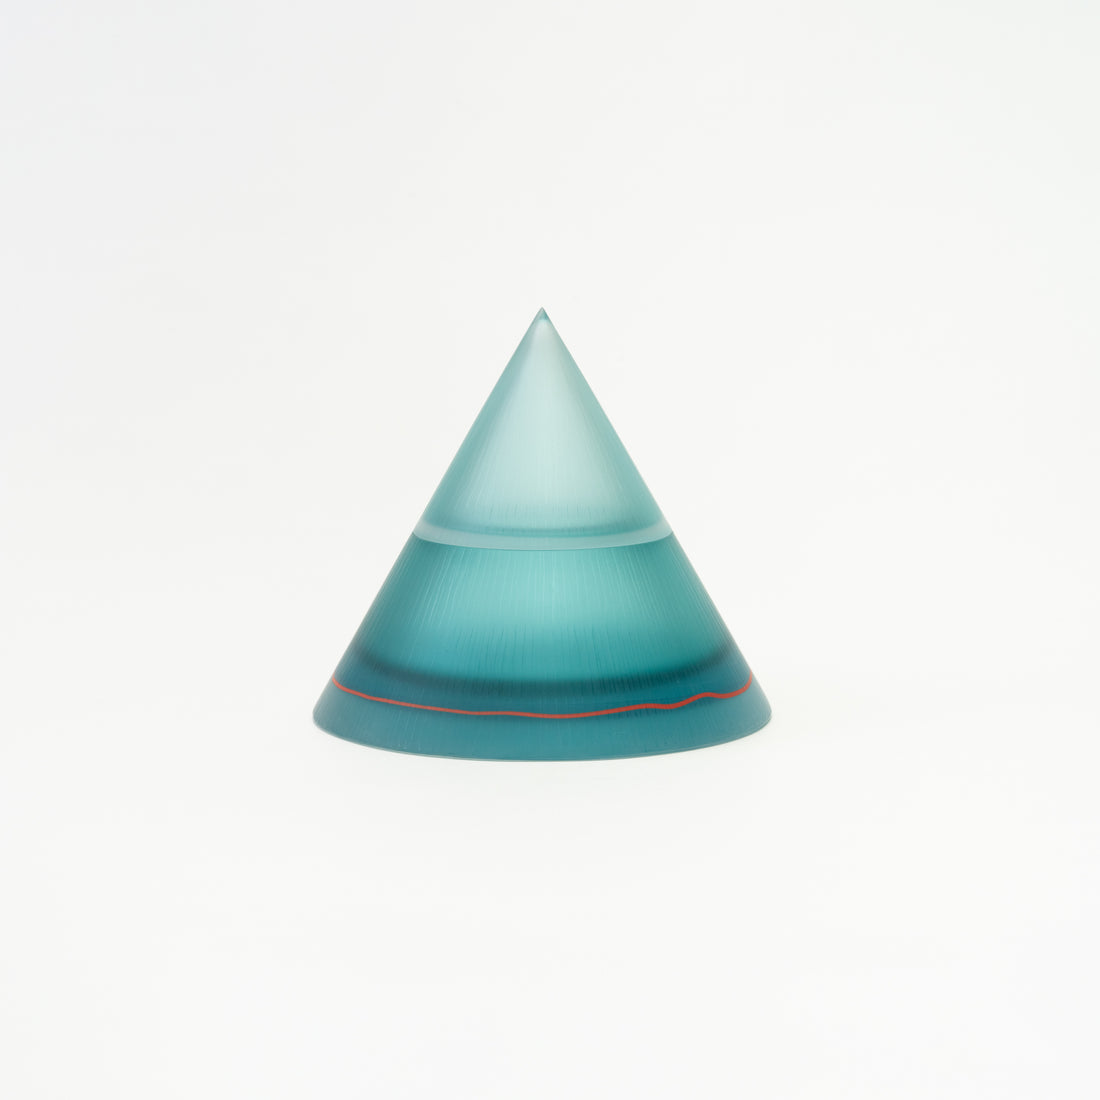 Silence Glass - Triangle / Takeyoshi Mitsui